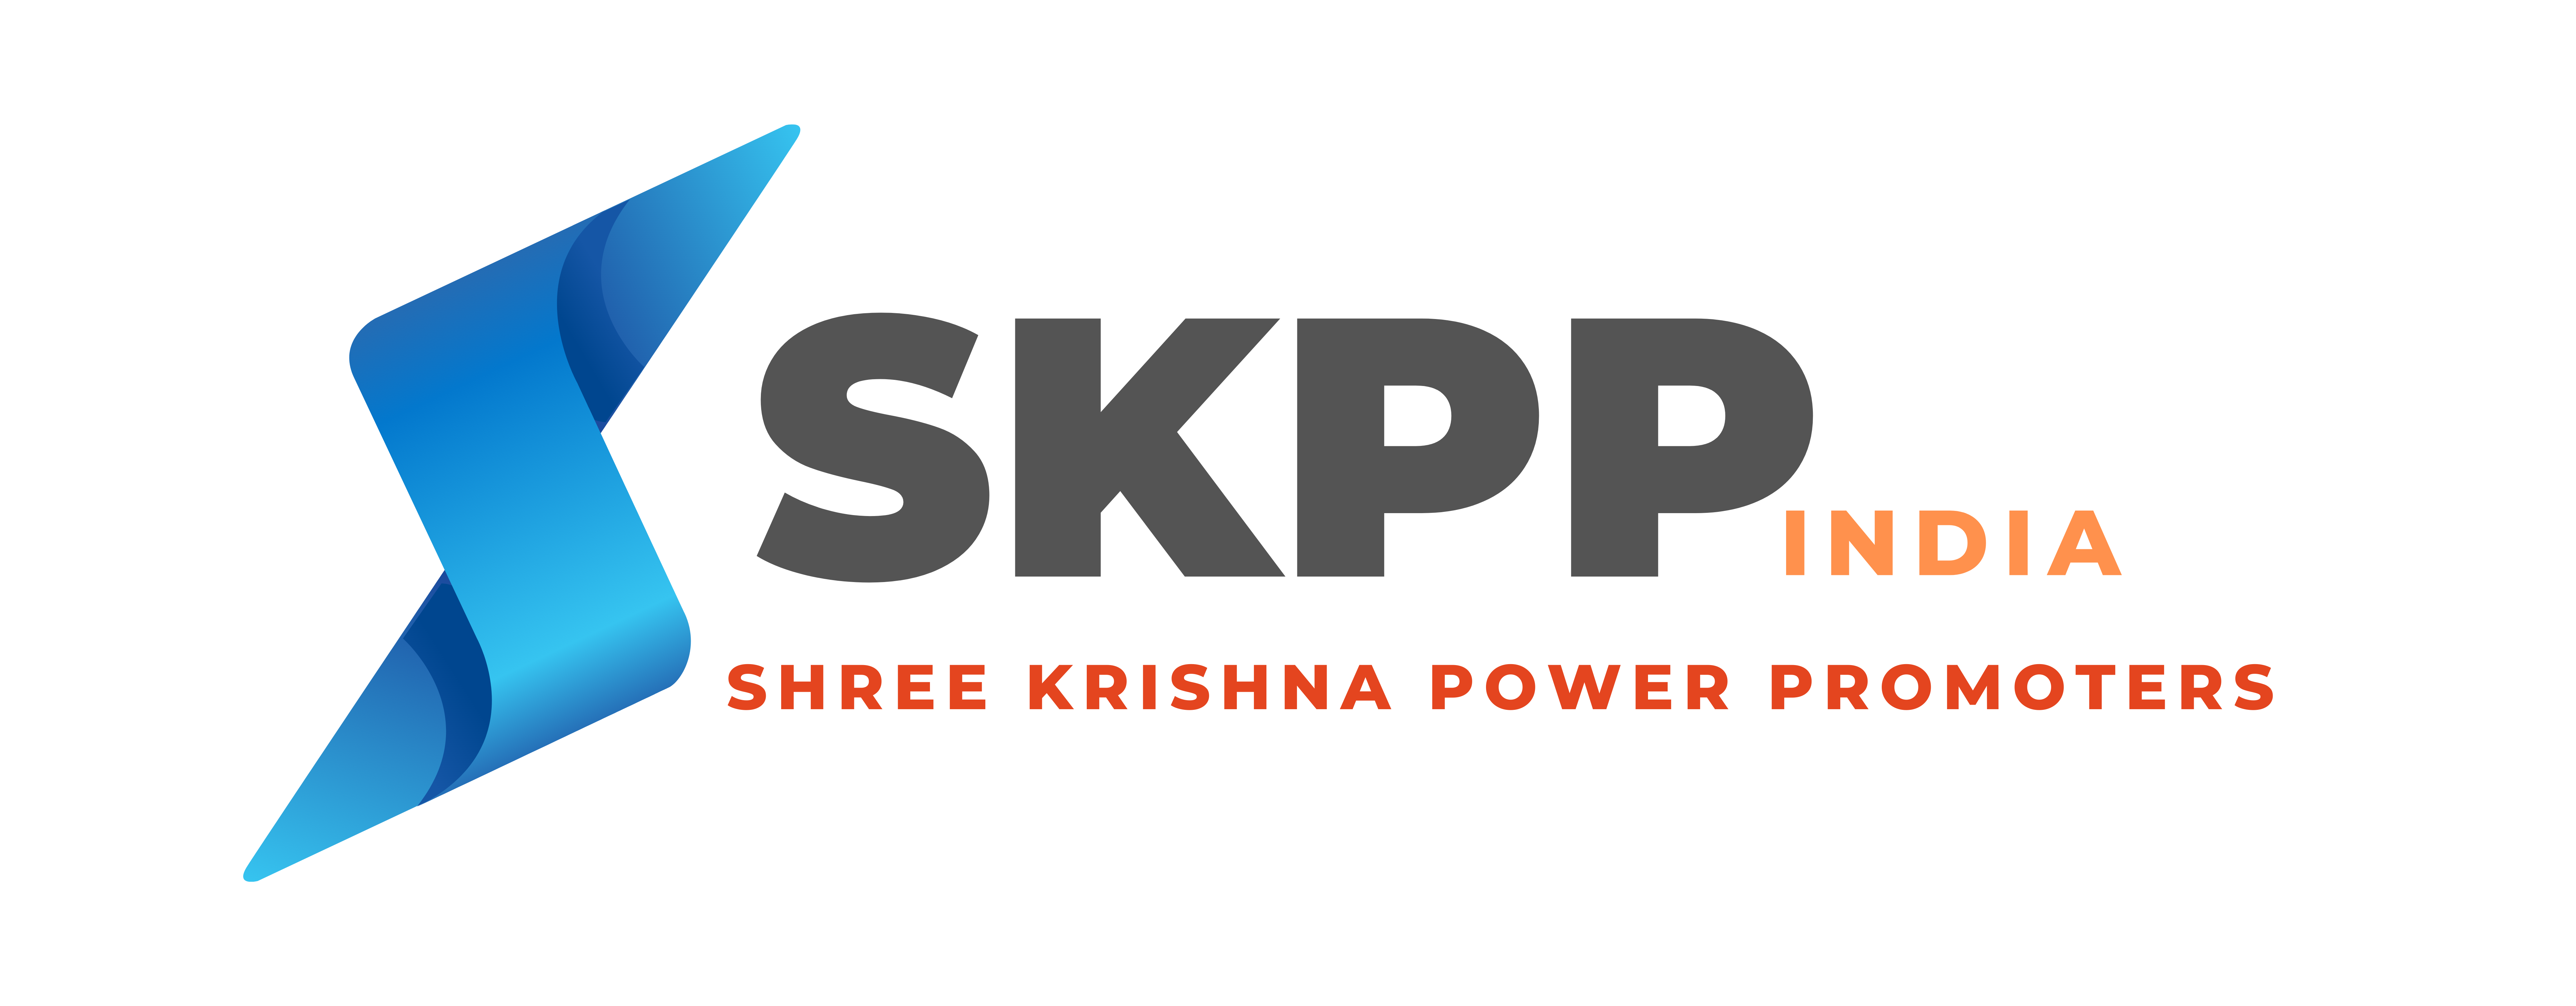 Shree Krishna Power Promoters - SKPP INDIA